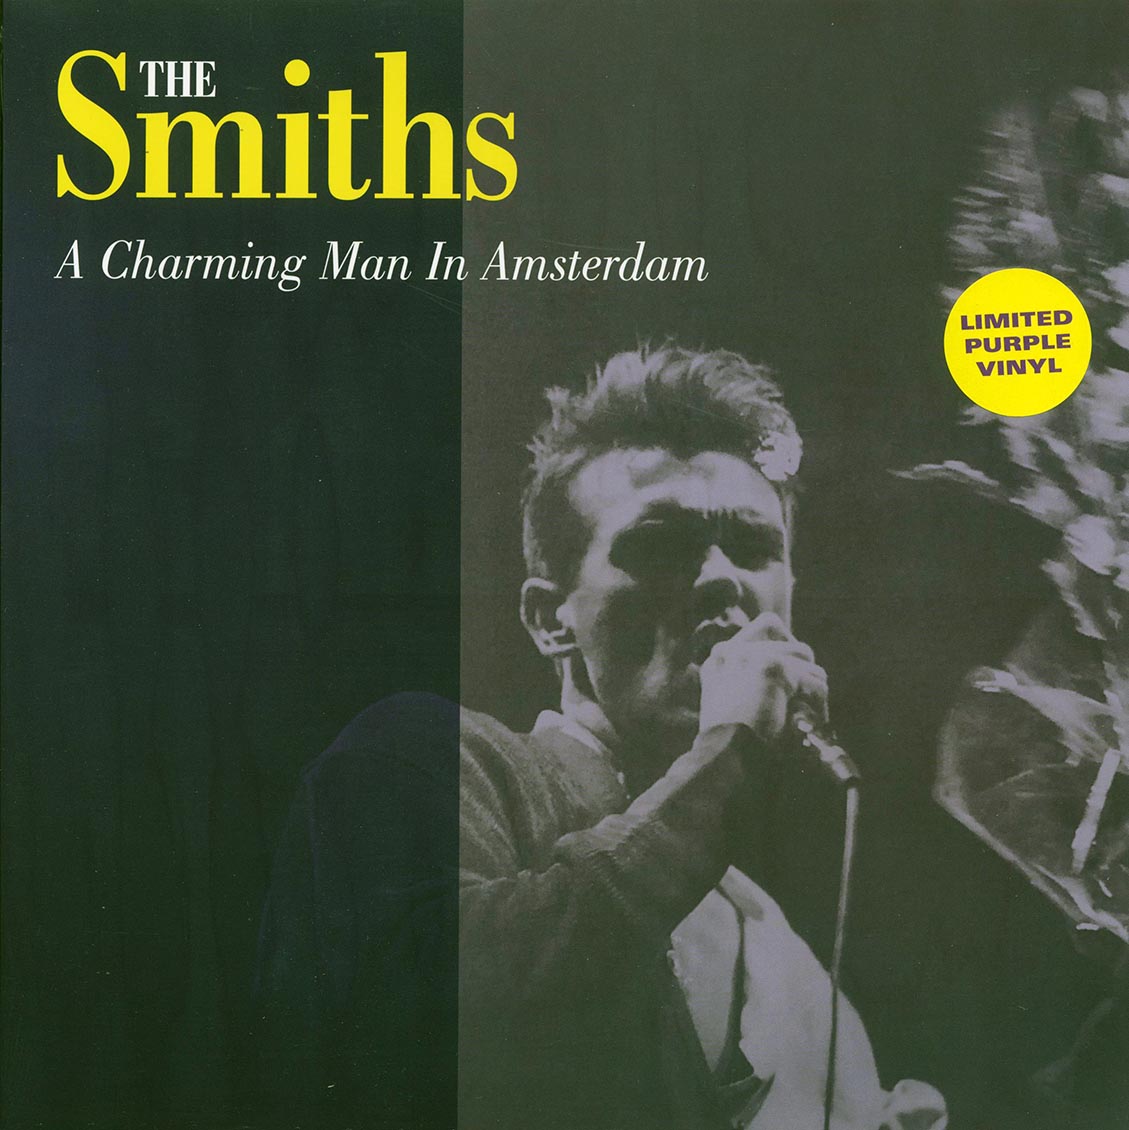 The Smiths - A Charming Man In Amsterdam: De Meervaart Hall, 21-04-84 (ltd. ed.) (purple vinyl) - Vinyl LP